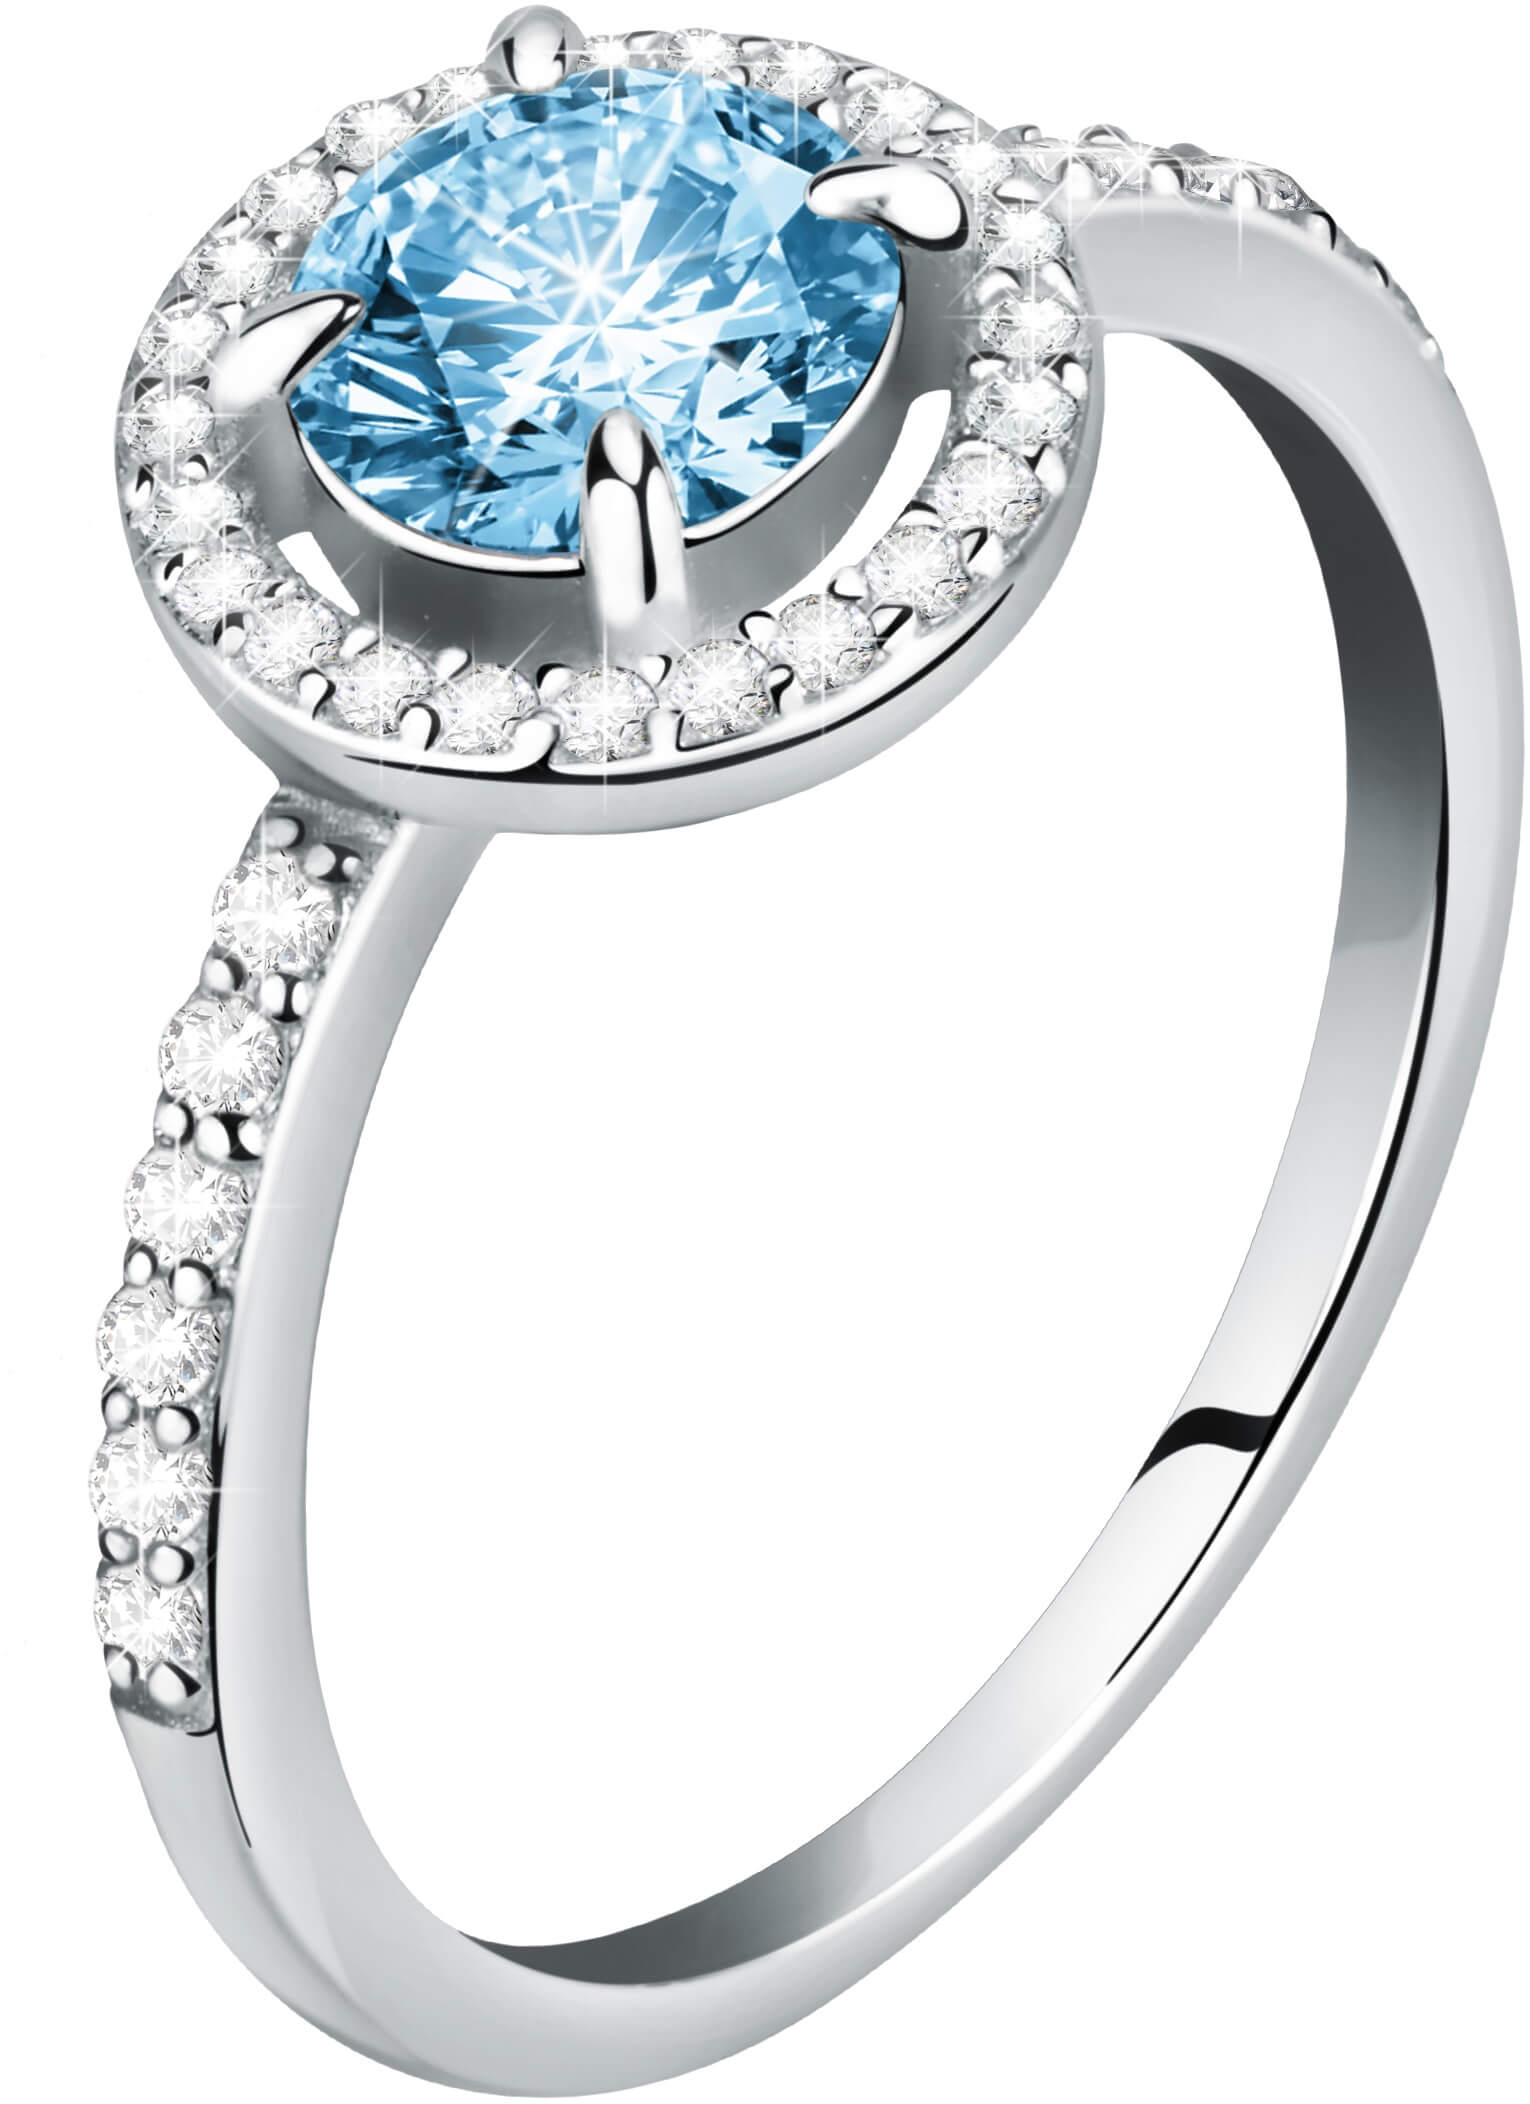 Morellato Něžný stříbrný prsten s akvamarínem a krystaly Tesori SAIW9701 58 mm